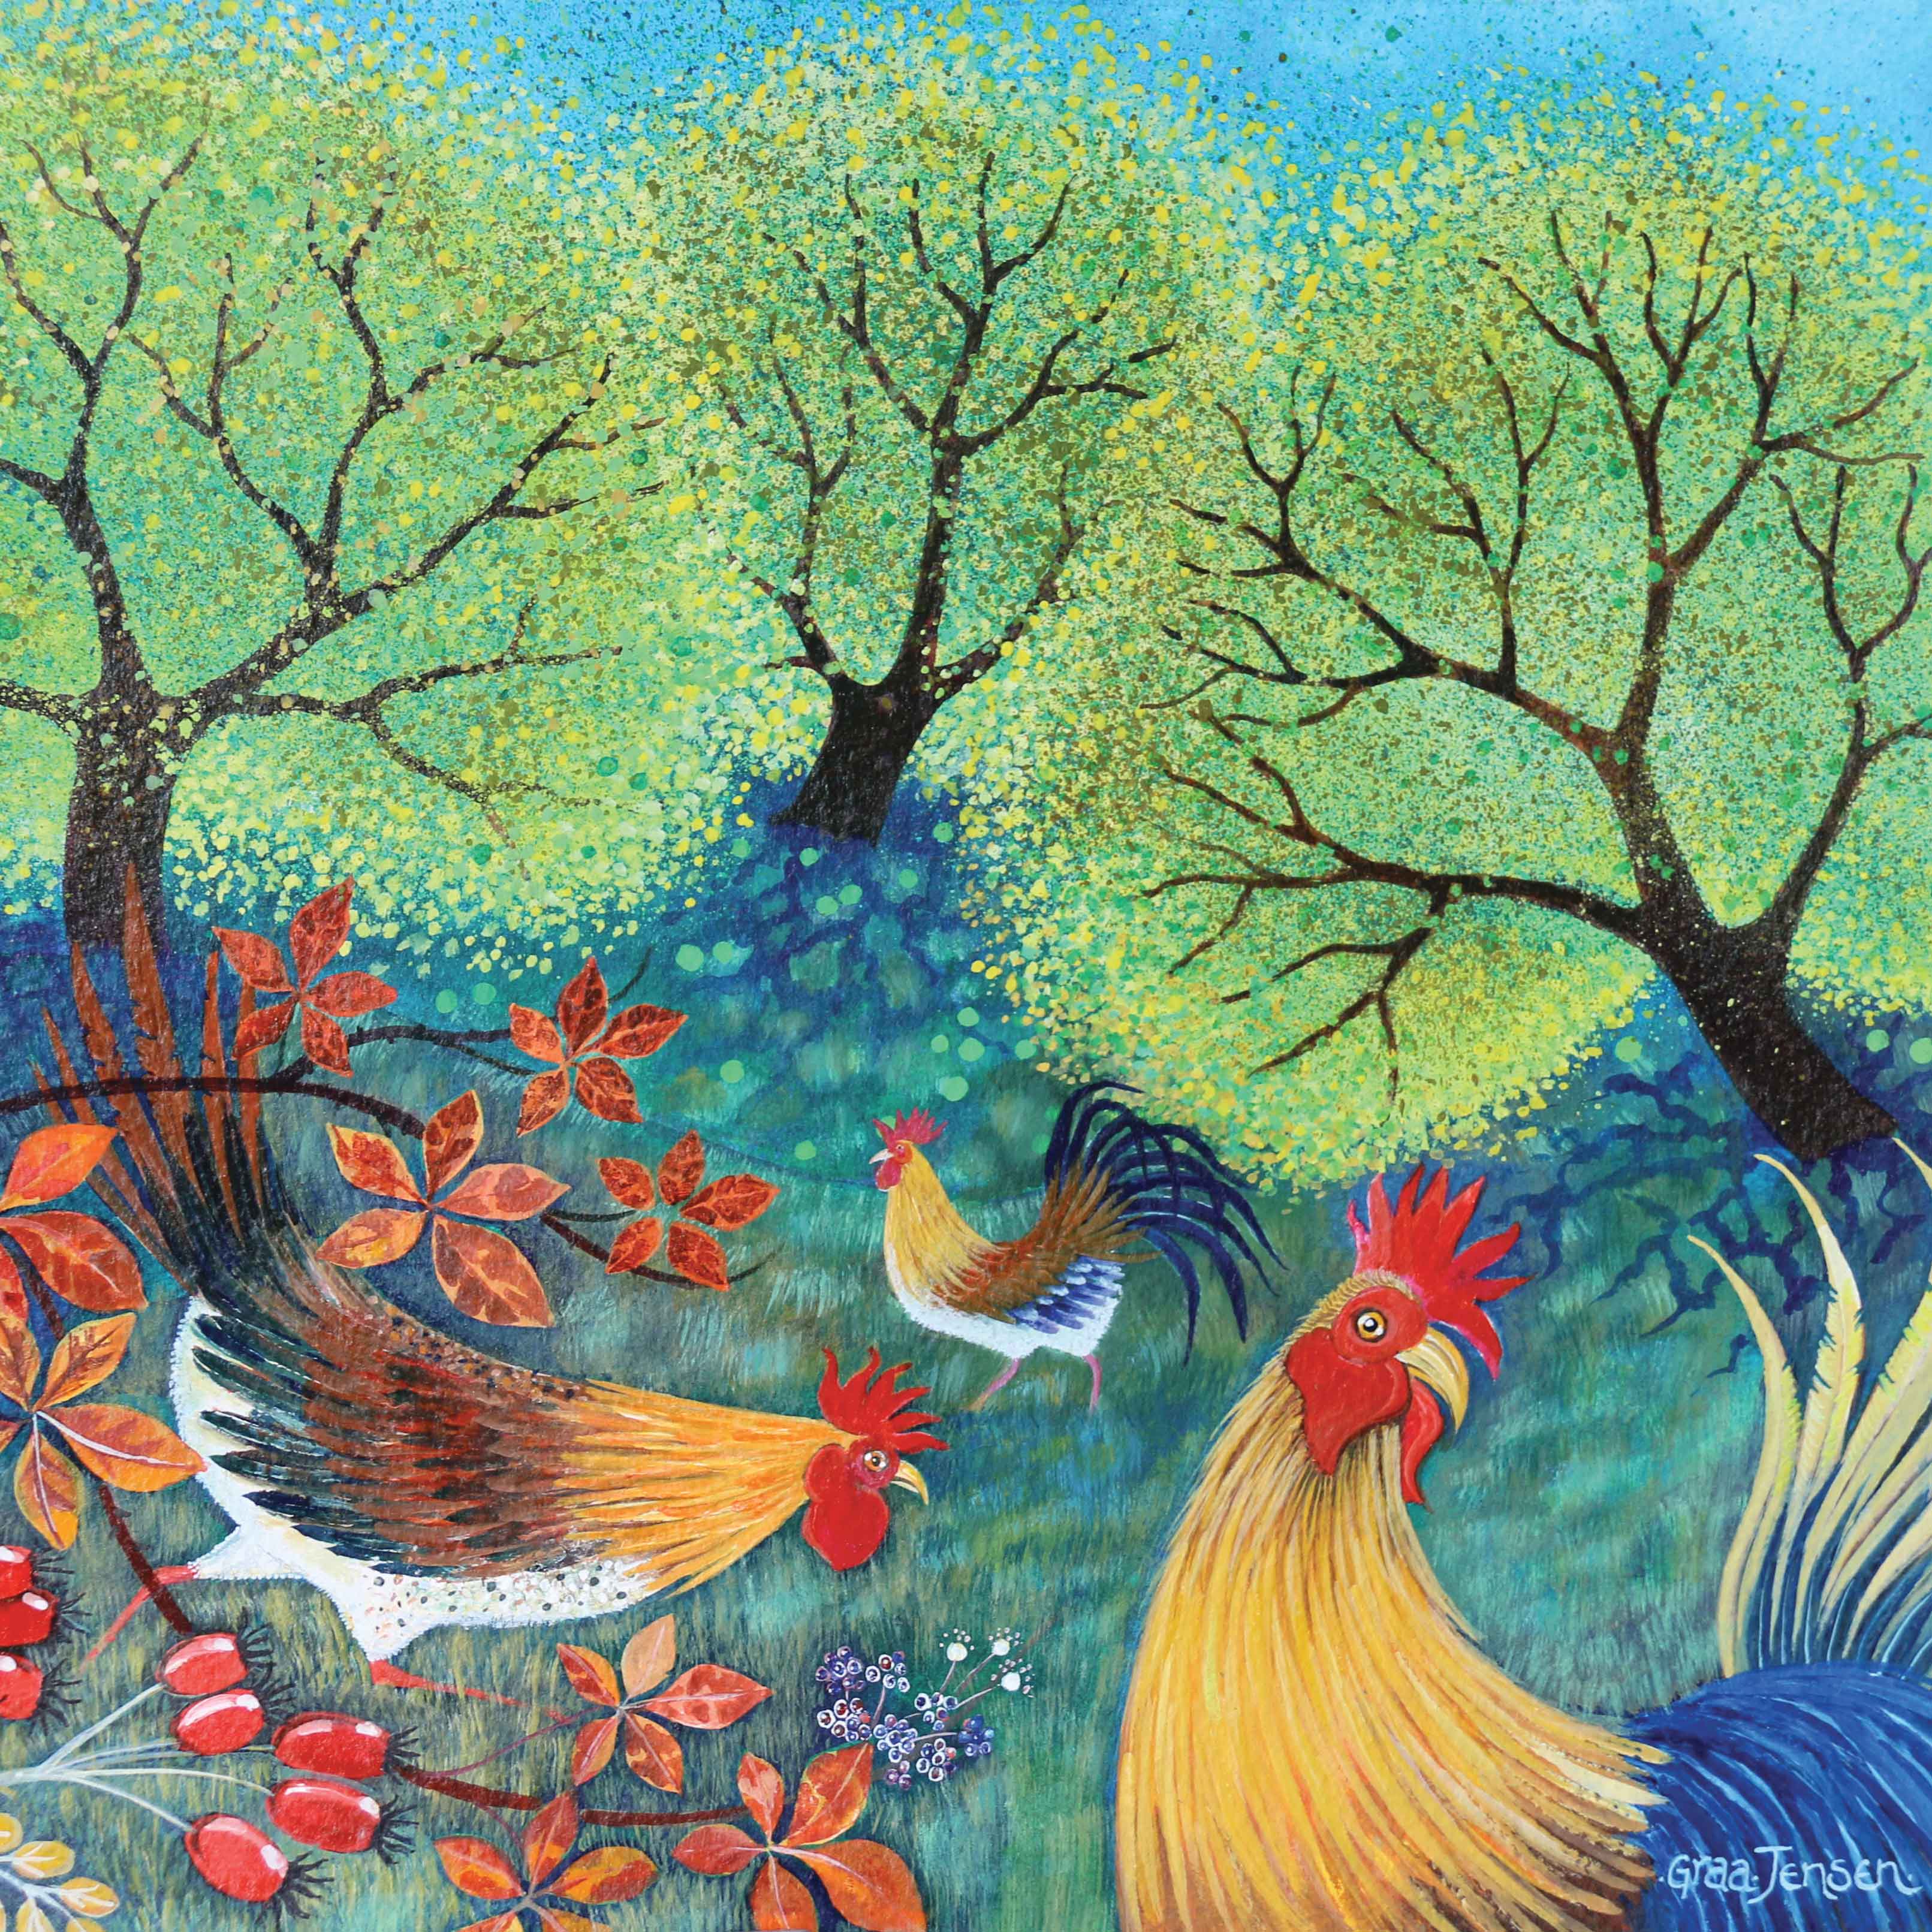 Peeky Hen by Lisa Graa Jensen, Fine Art Greeting Card, Acrylic Inks, Chickens in the garden